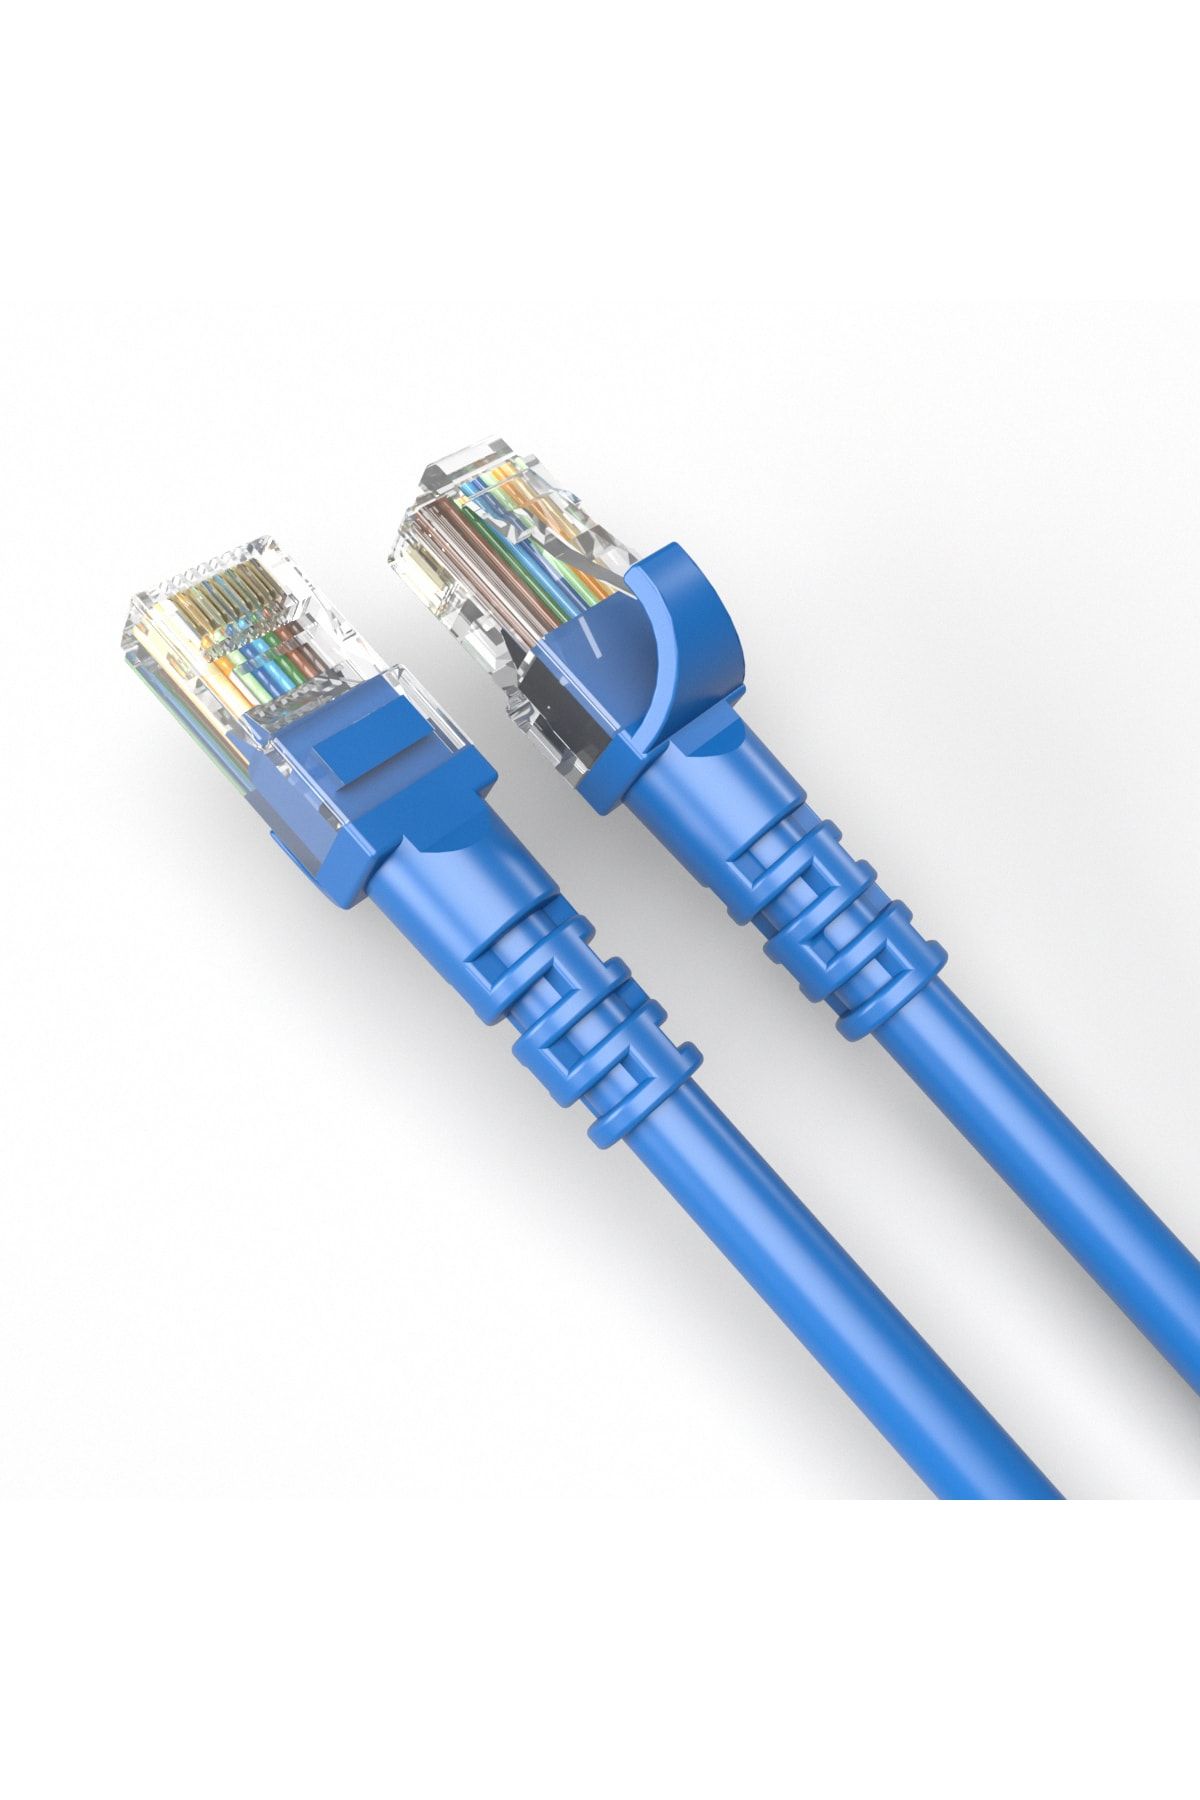 DERKAB 25 Metre Cat6 Network-Ağ-Ethernet Kablosu Mavi